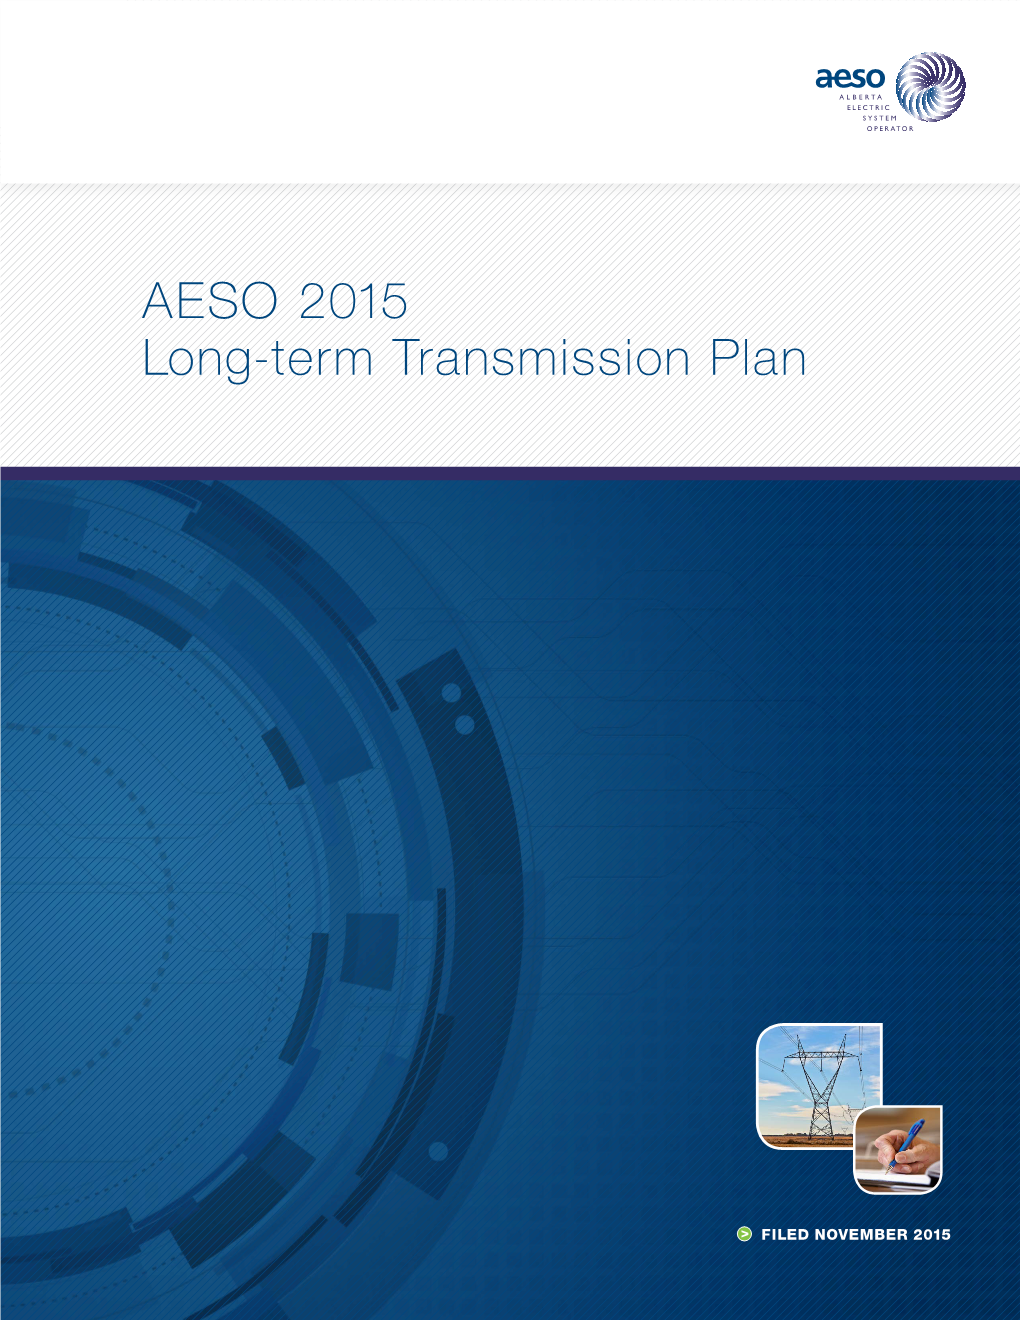 AESO 2015 Long-Term Transmission Plan